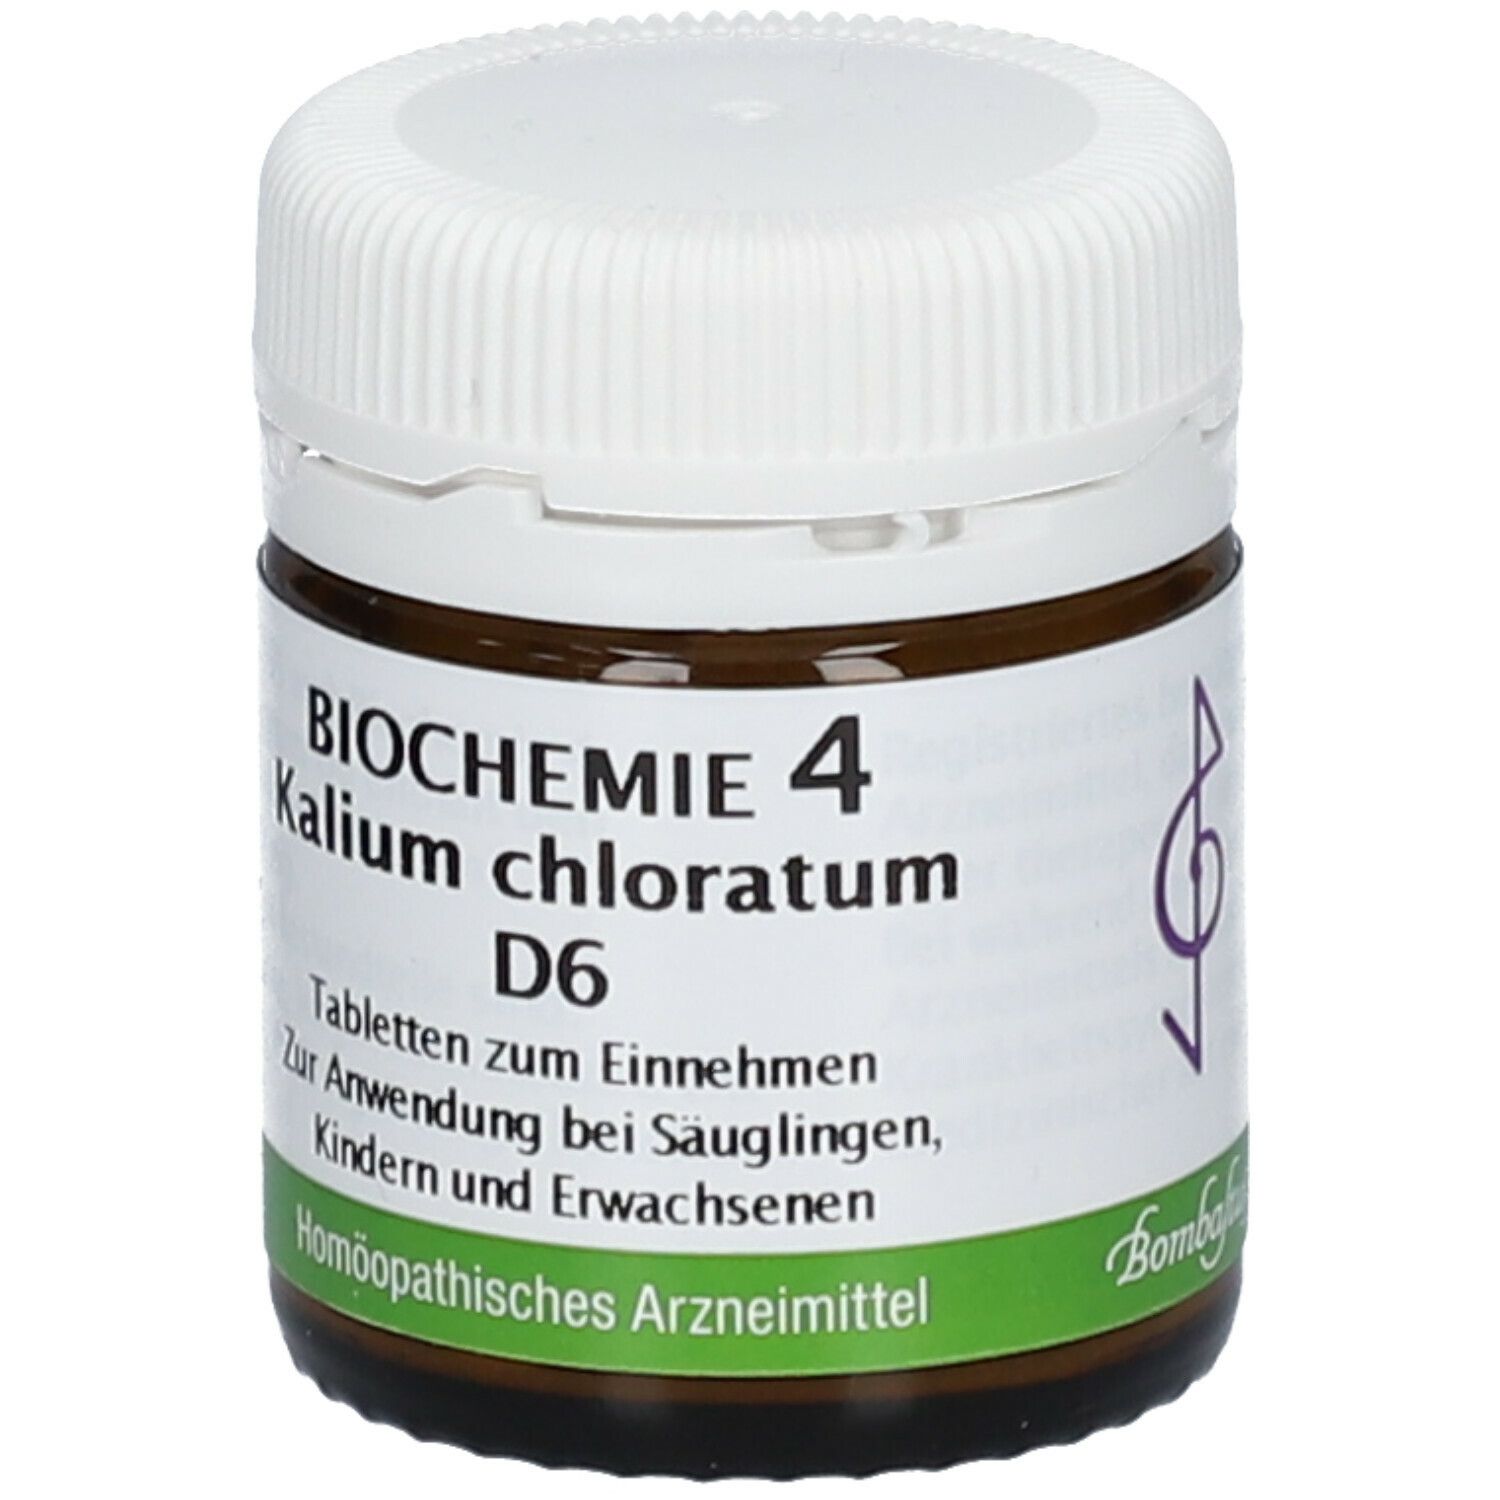 Bombastus Biochemie 4 Kalium chloratum D 6 Tabletten